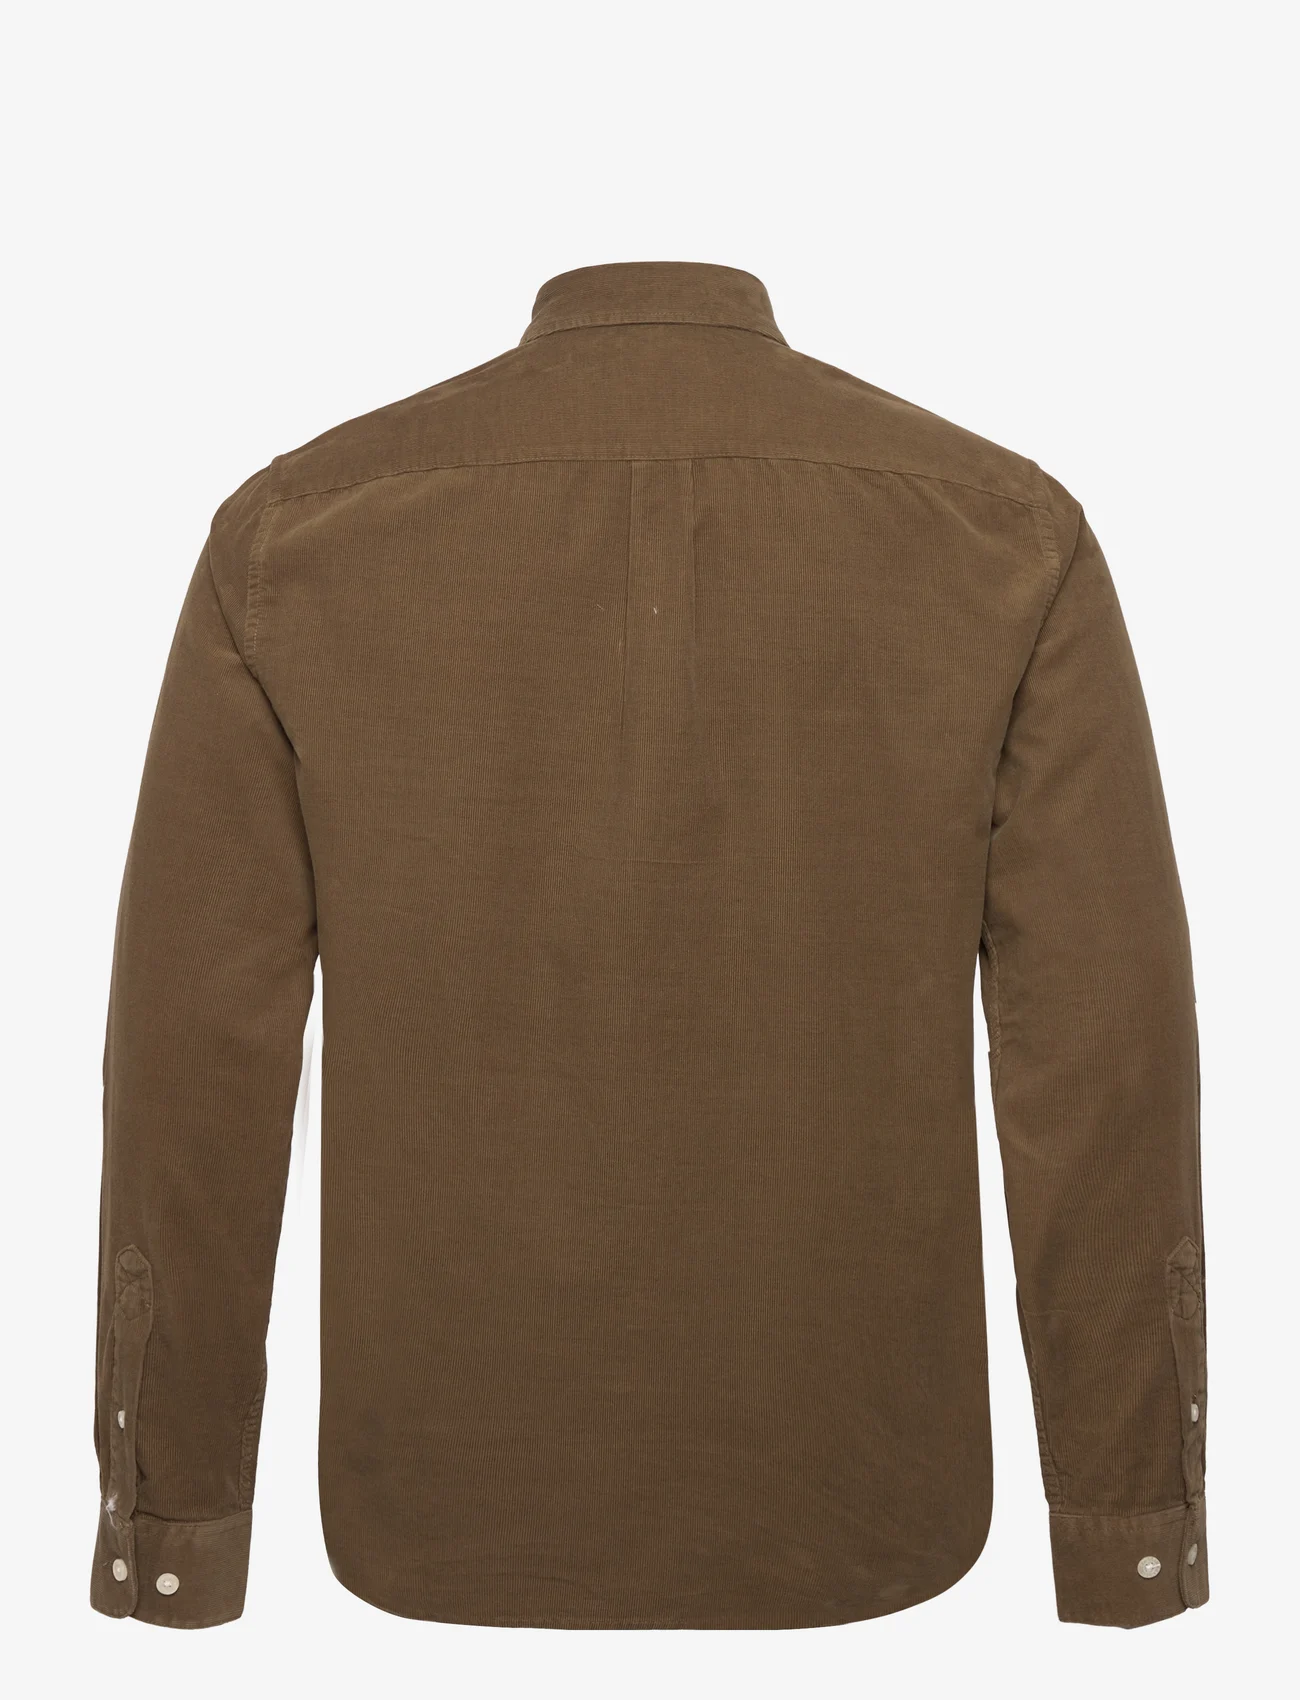 Samsøe Samsøe - Liam BX shirt 10504 - kordfløyelsskjorter - stone gray - 1